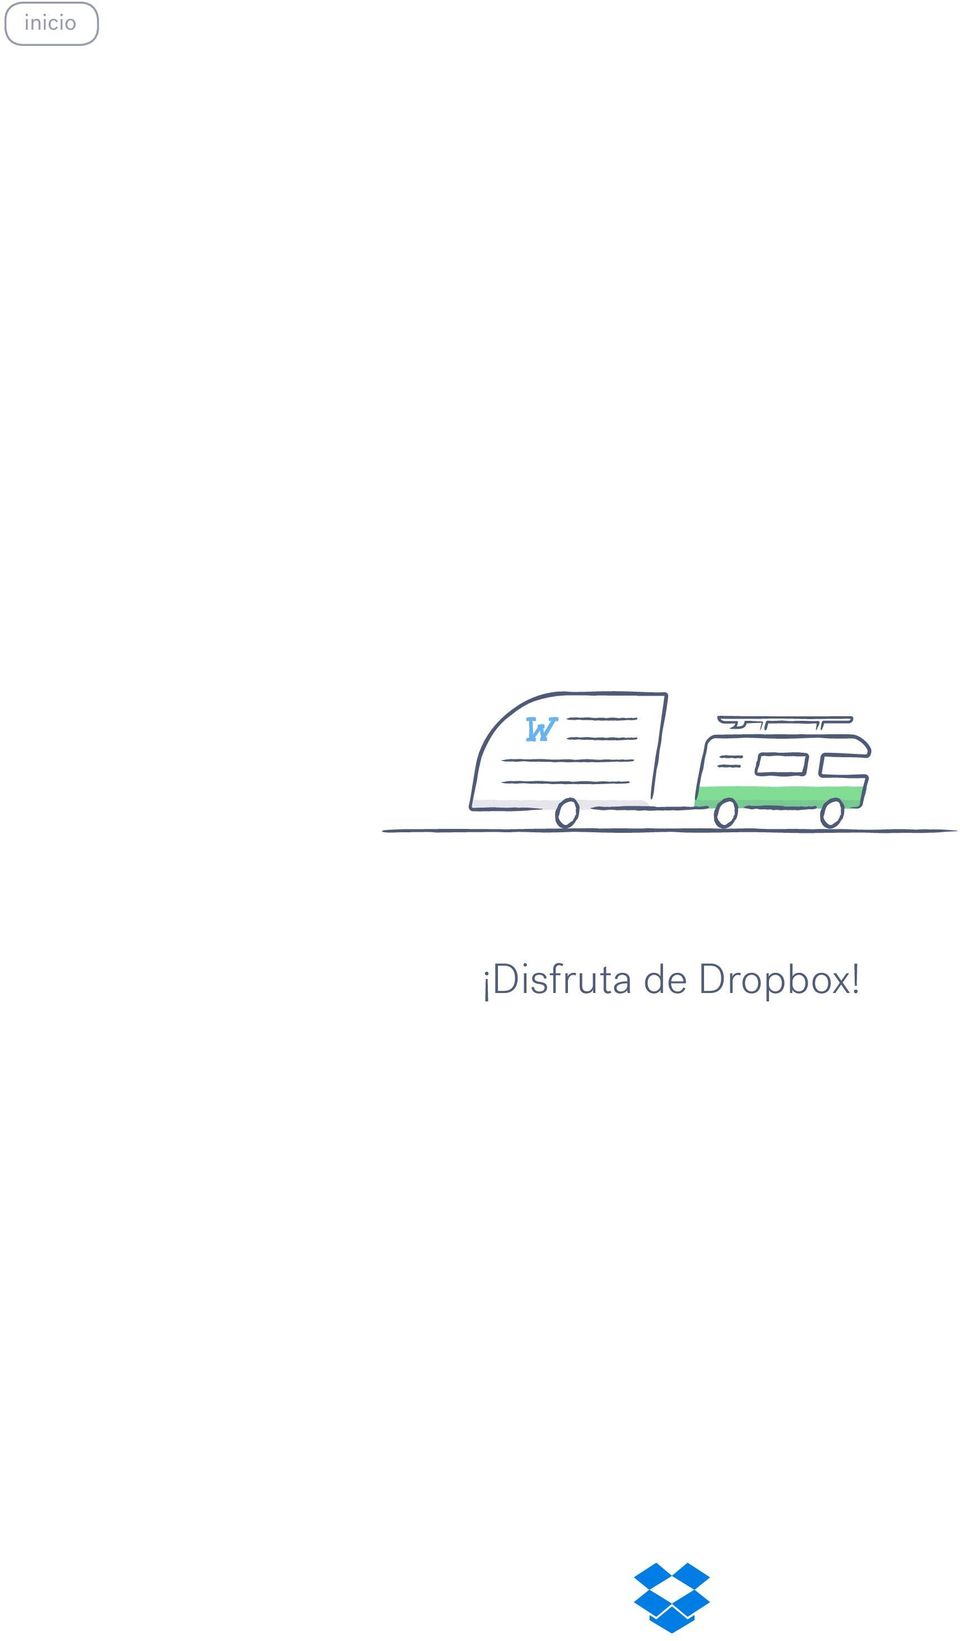 Dropbox!